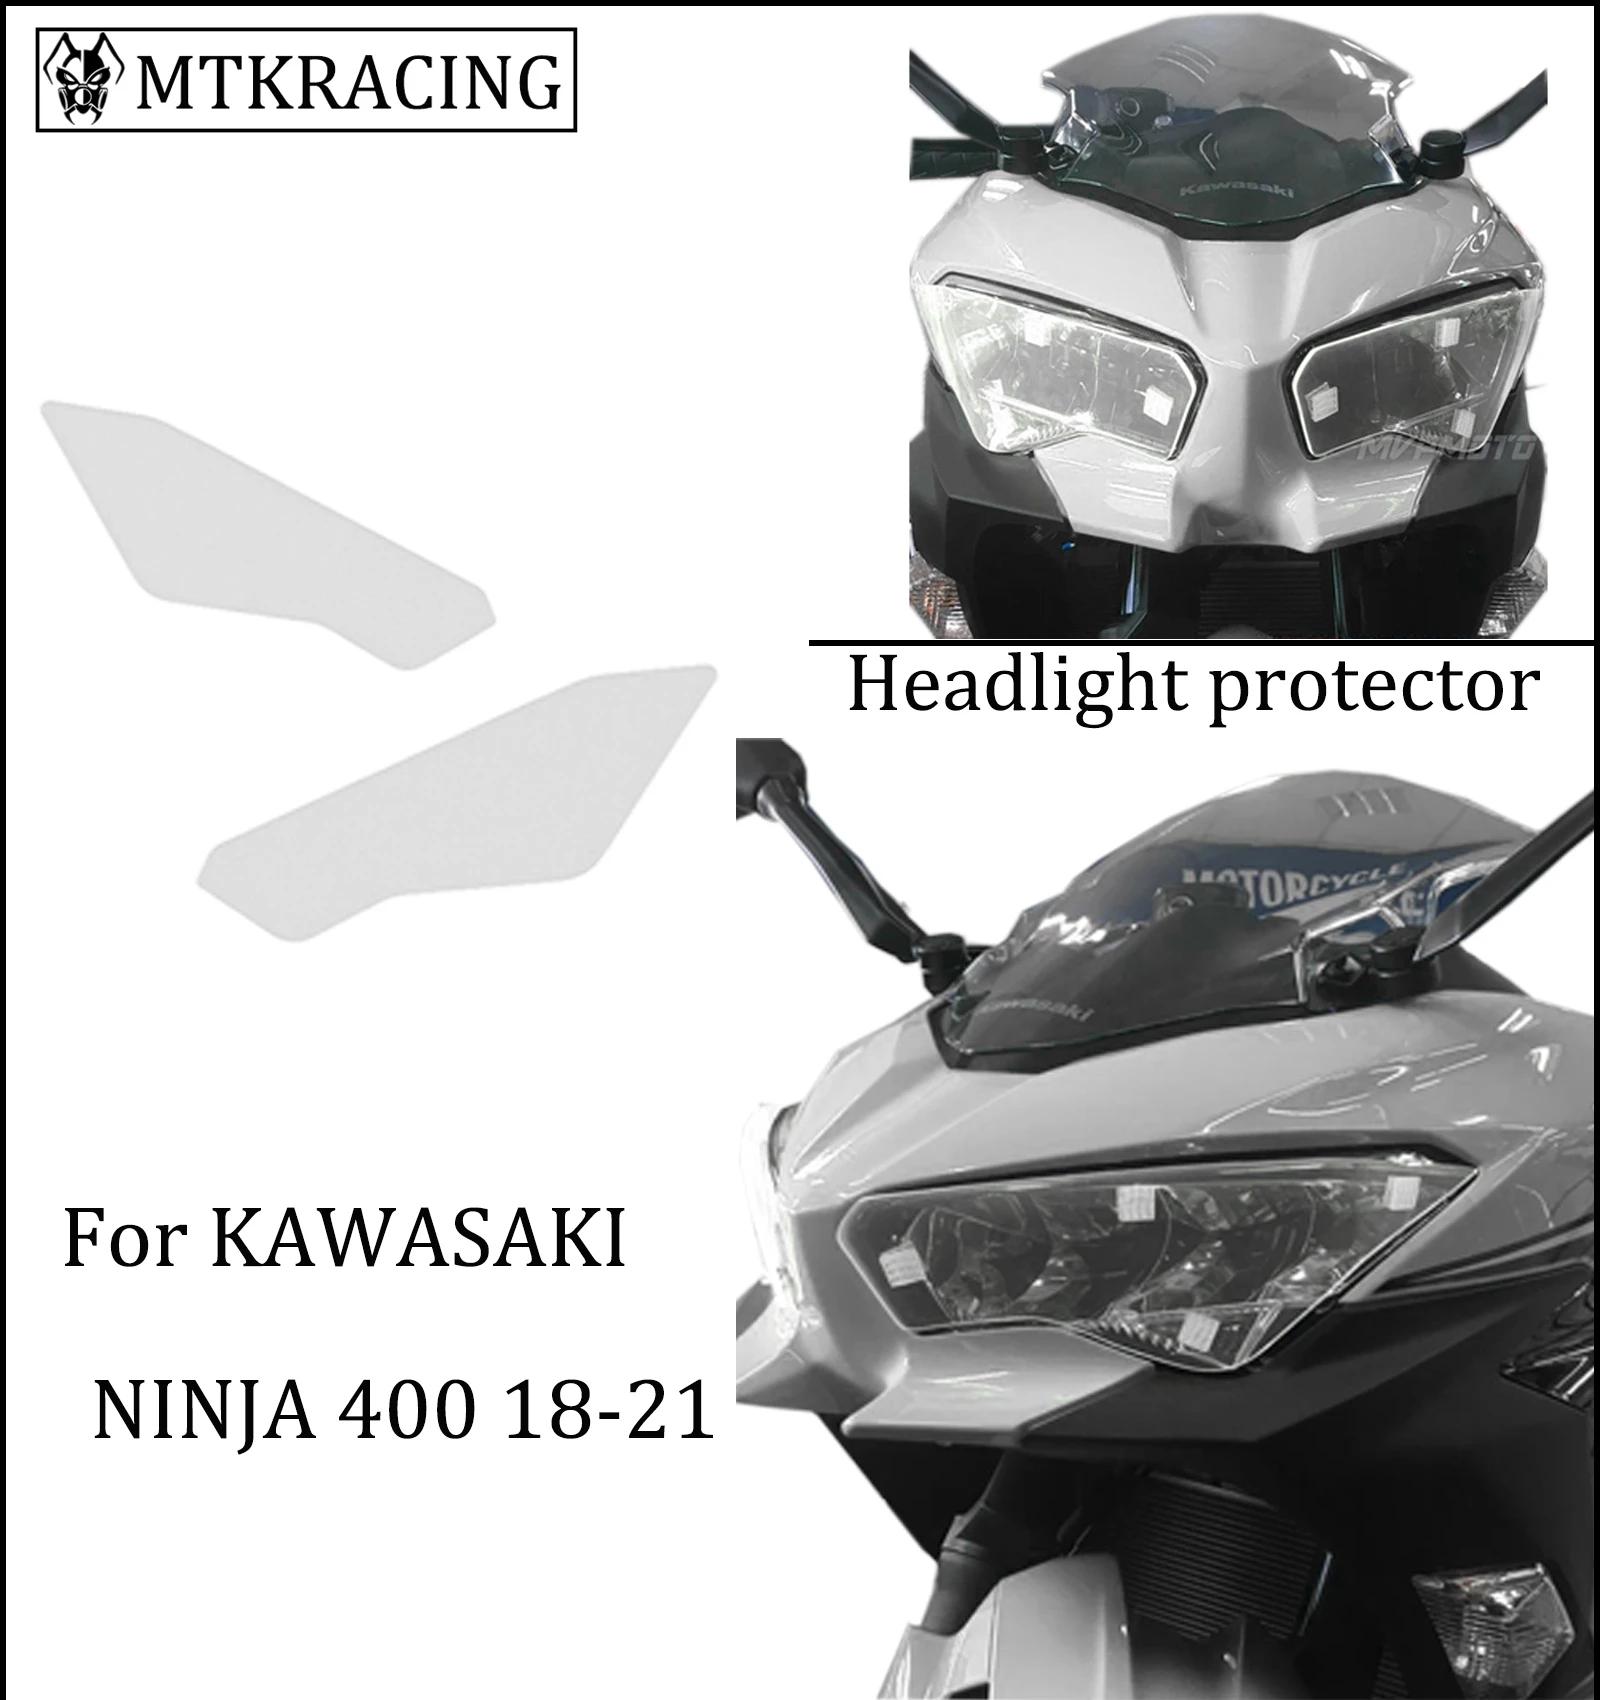 FOR KAWASAKI NINJA 400 NINJA400 2021 NINJA 650 NINJA650 2020 2021 Headlight protector cover screen lens|Covers & Mouldings| - AliExpress